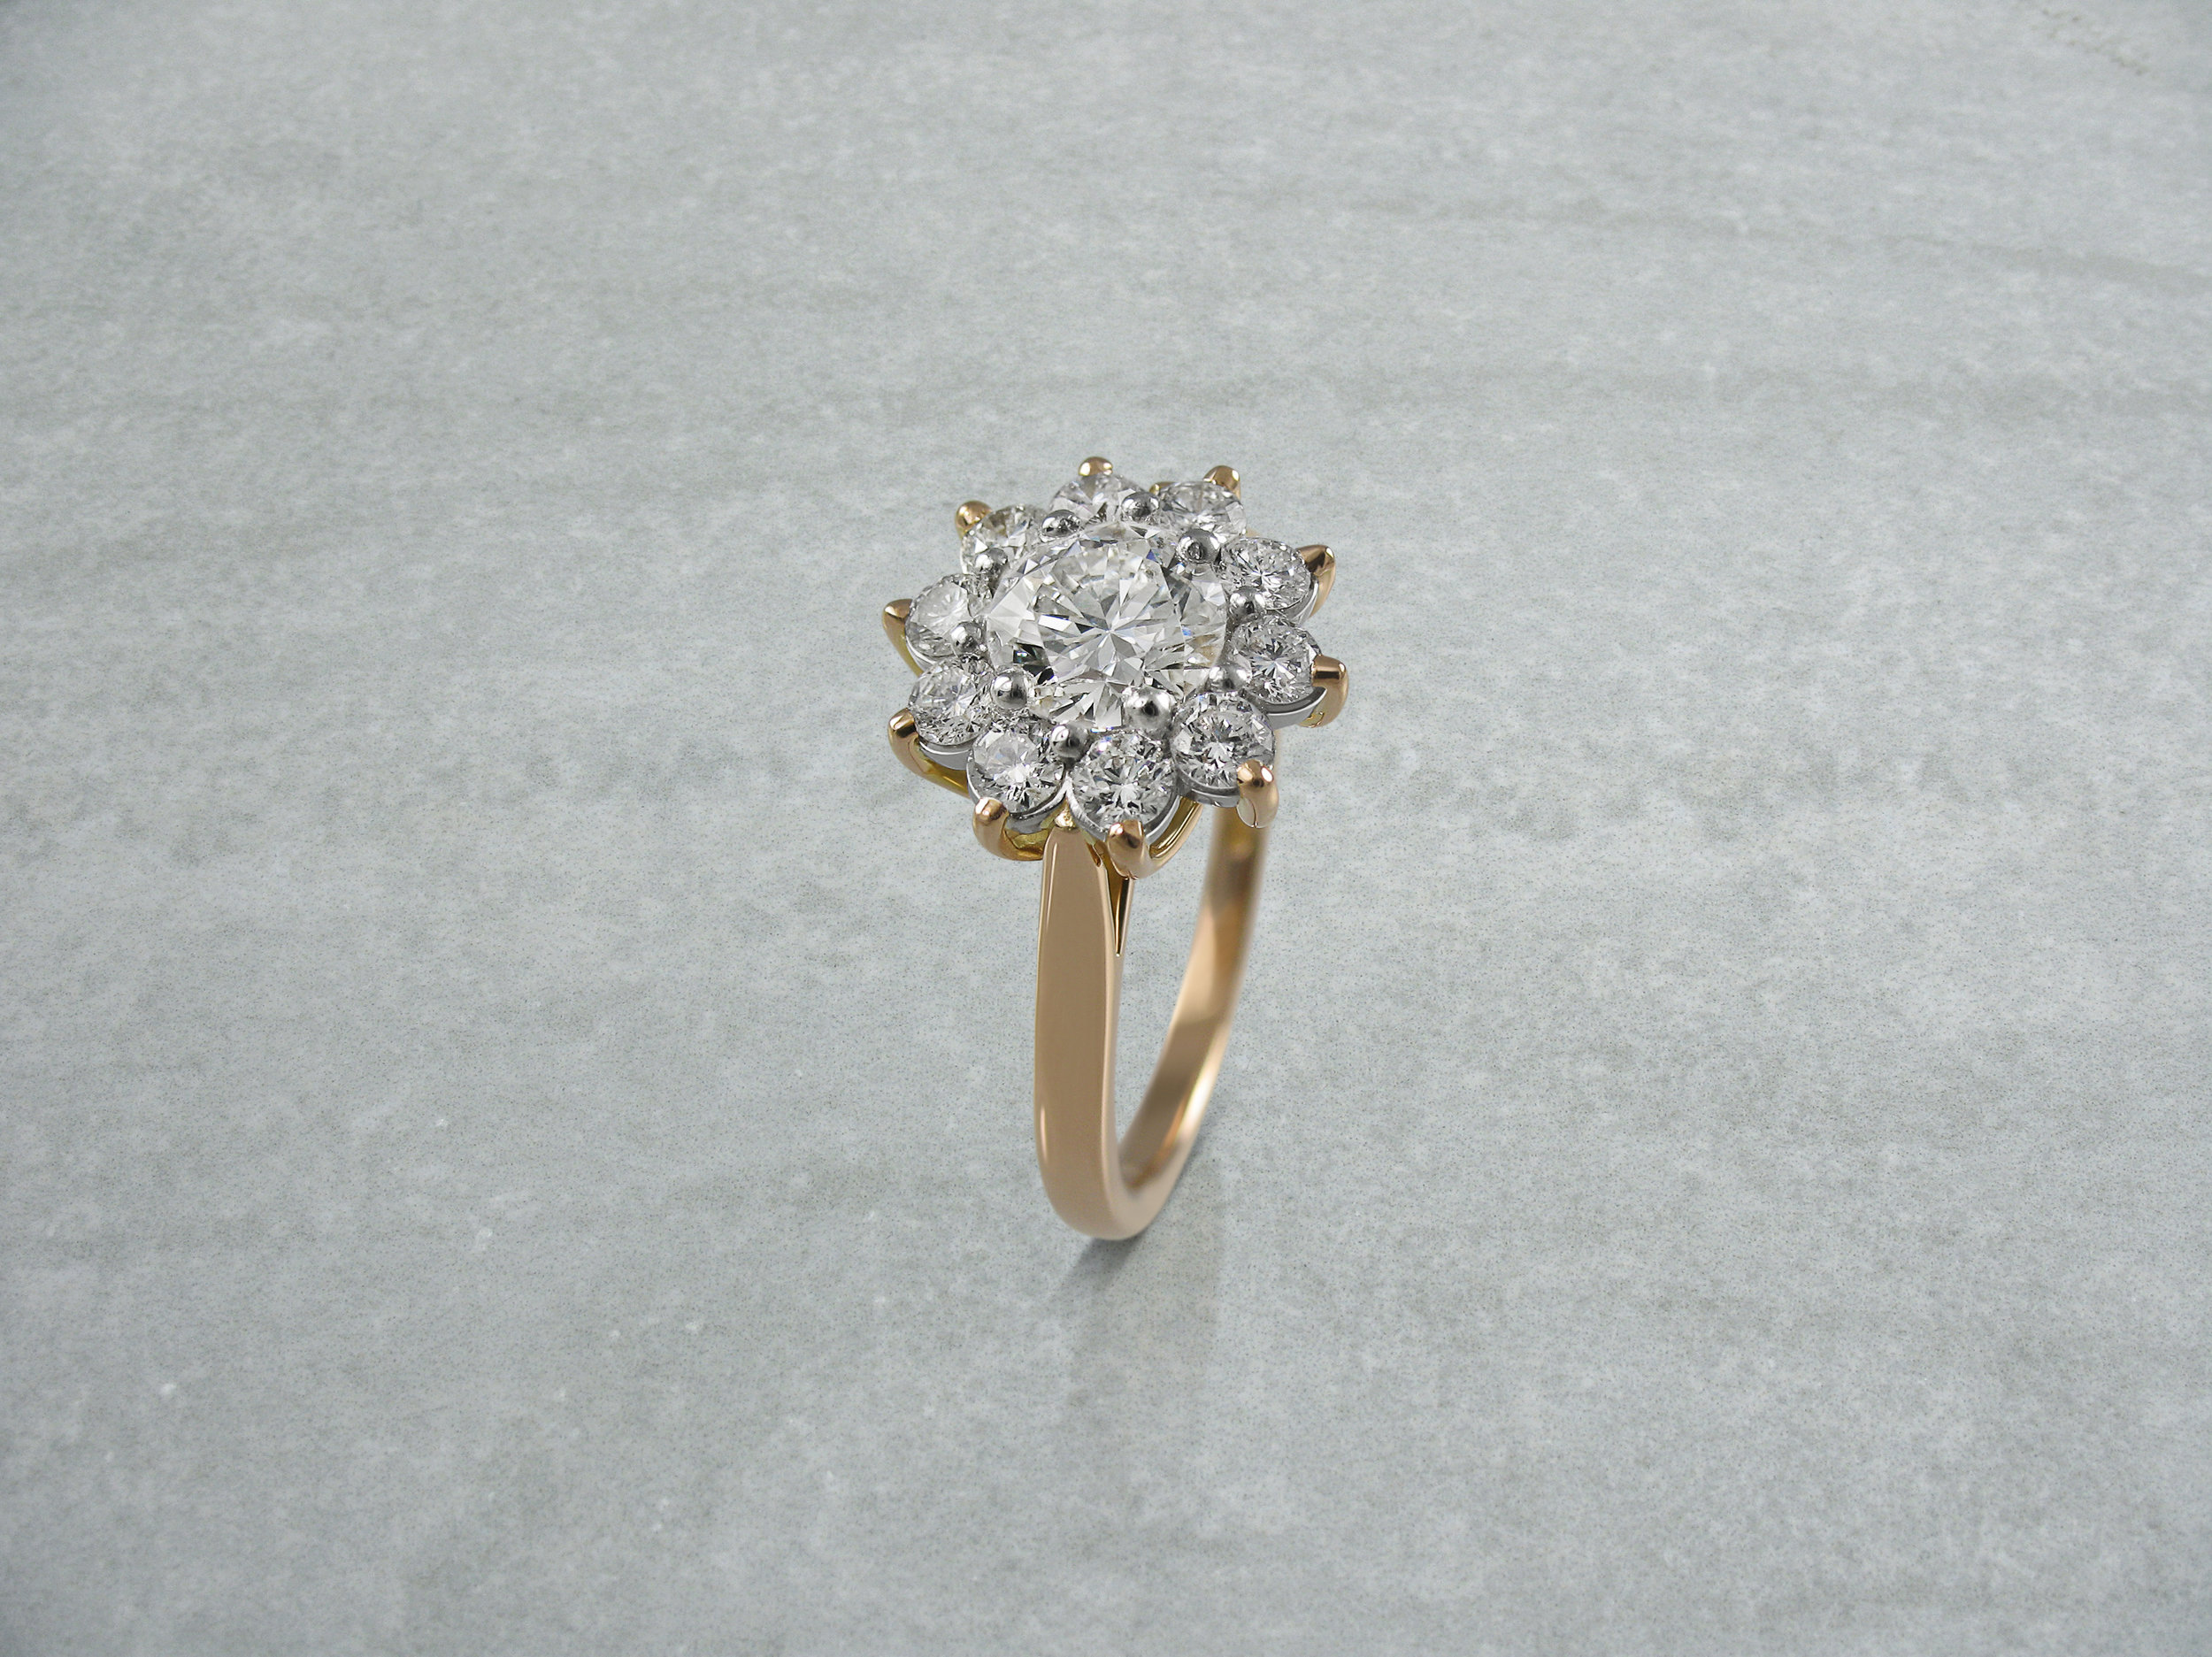 Round brilliant cut diamond rose gold cluster engagement ring